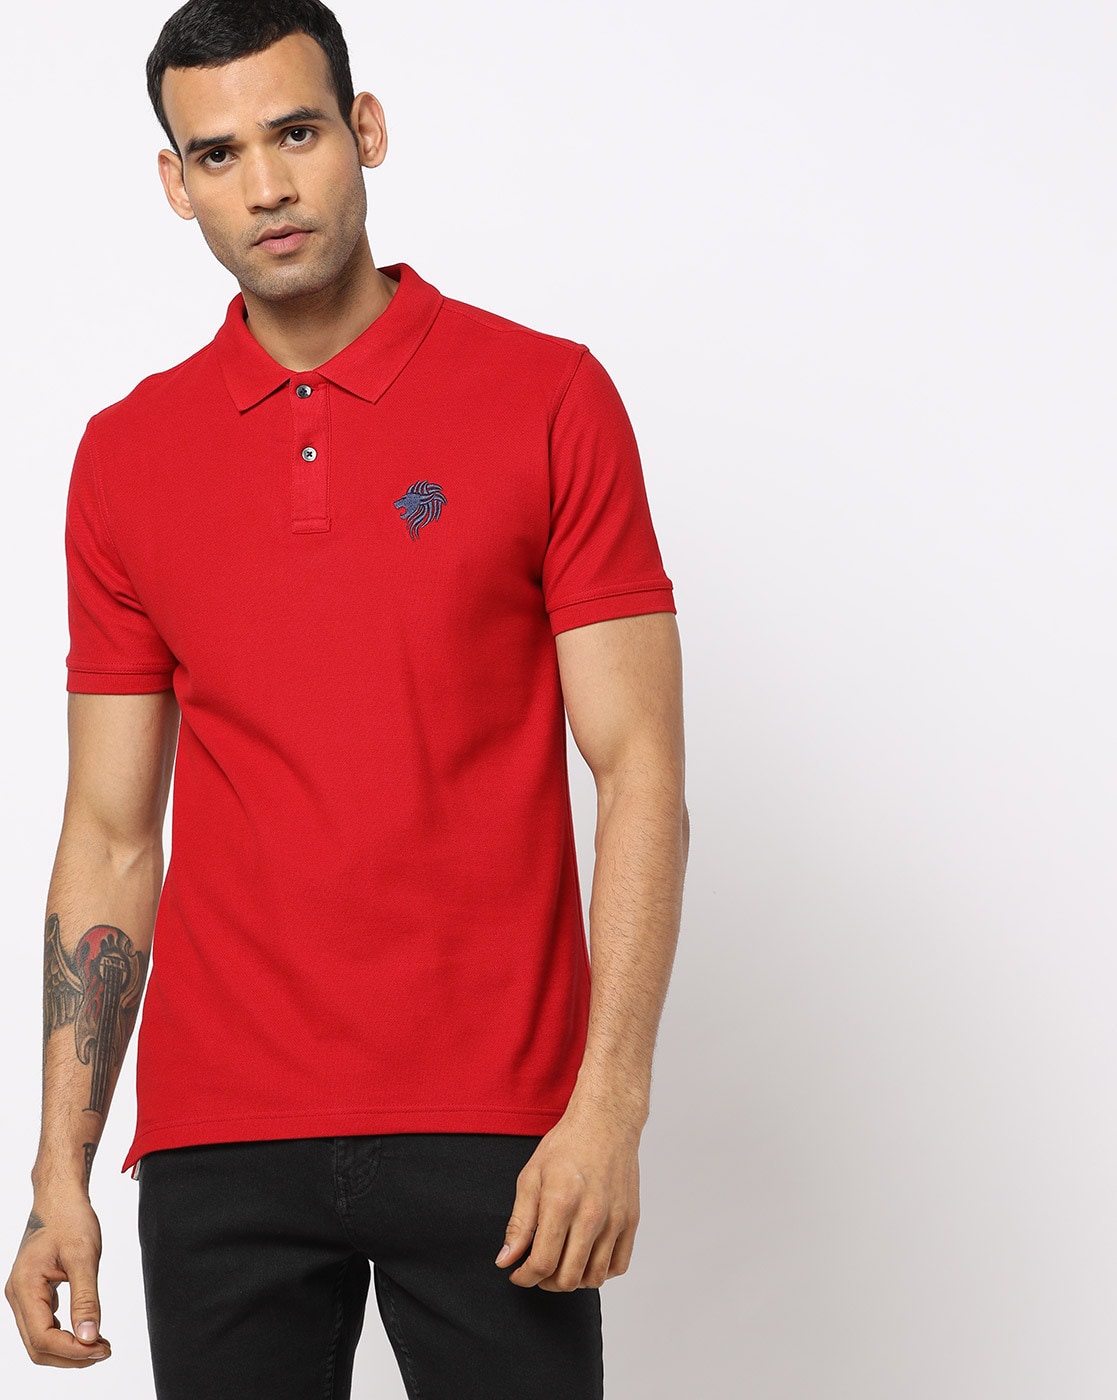 red t shirt online